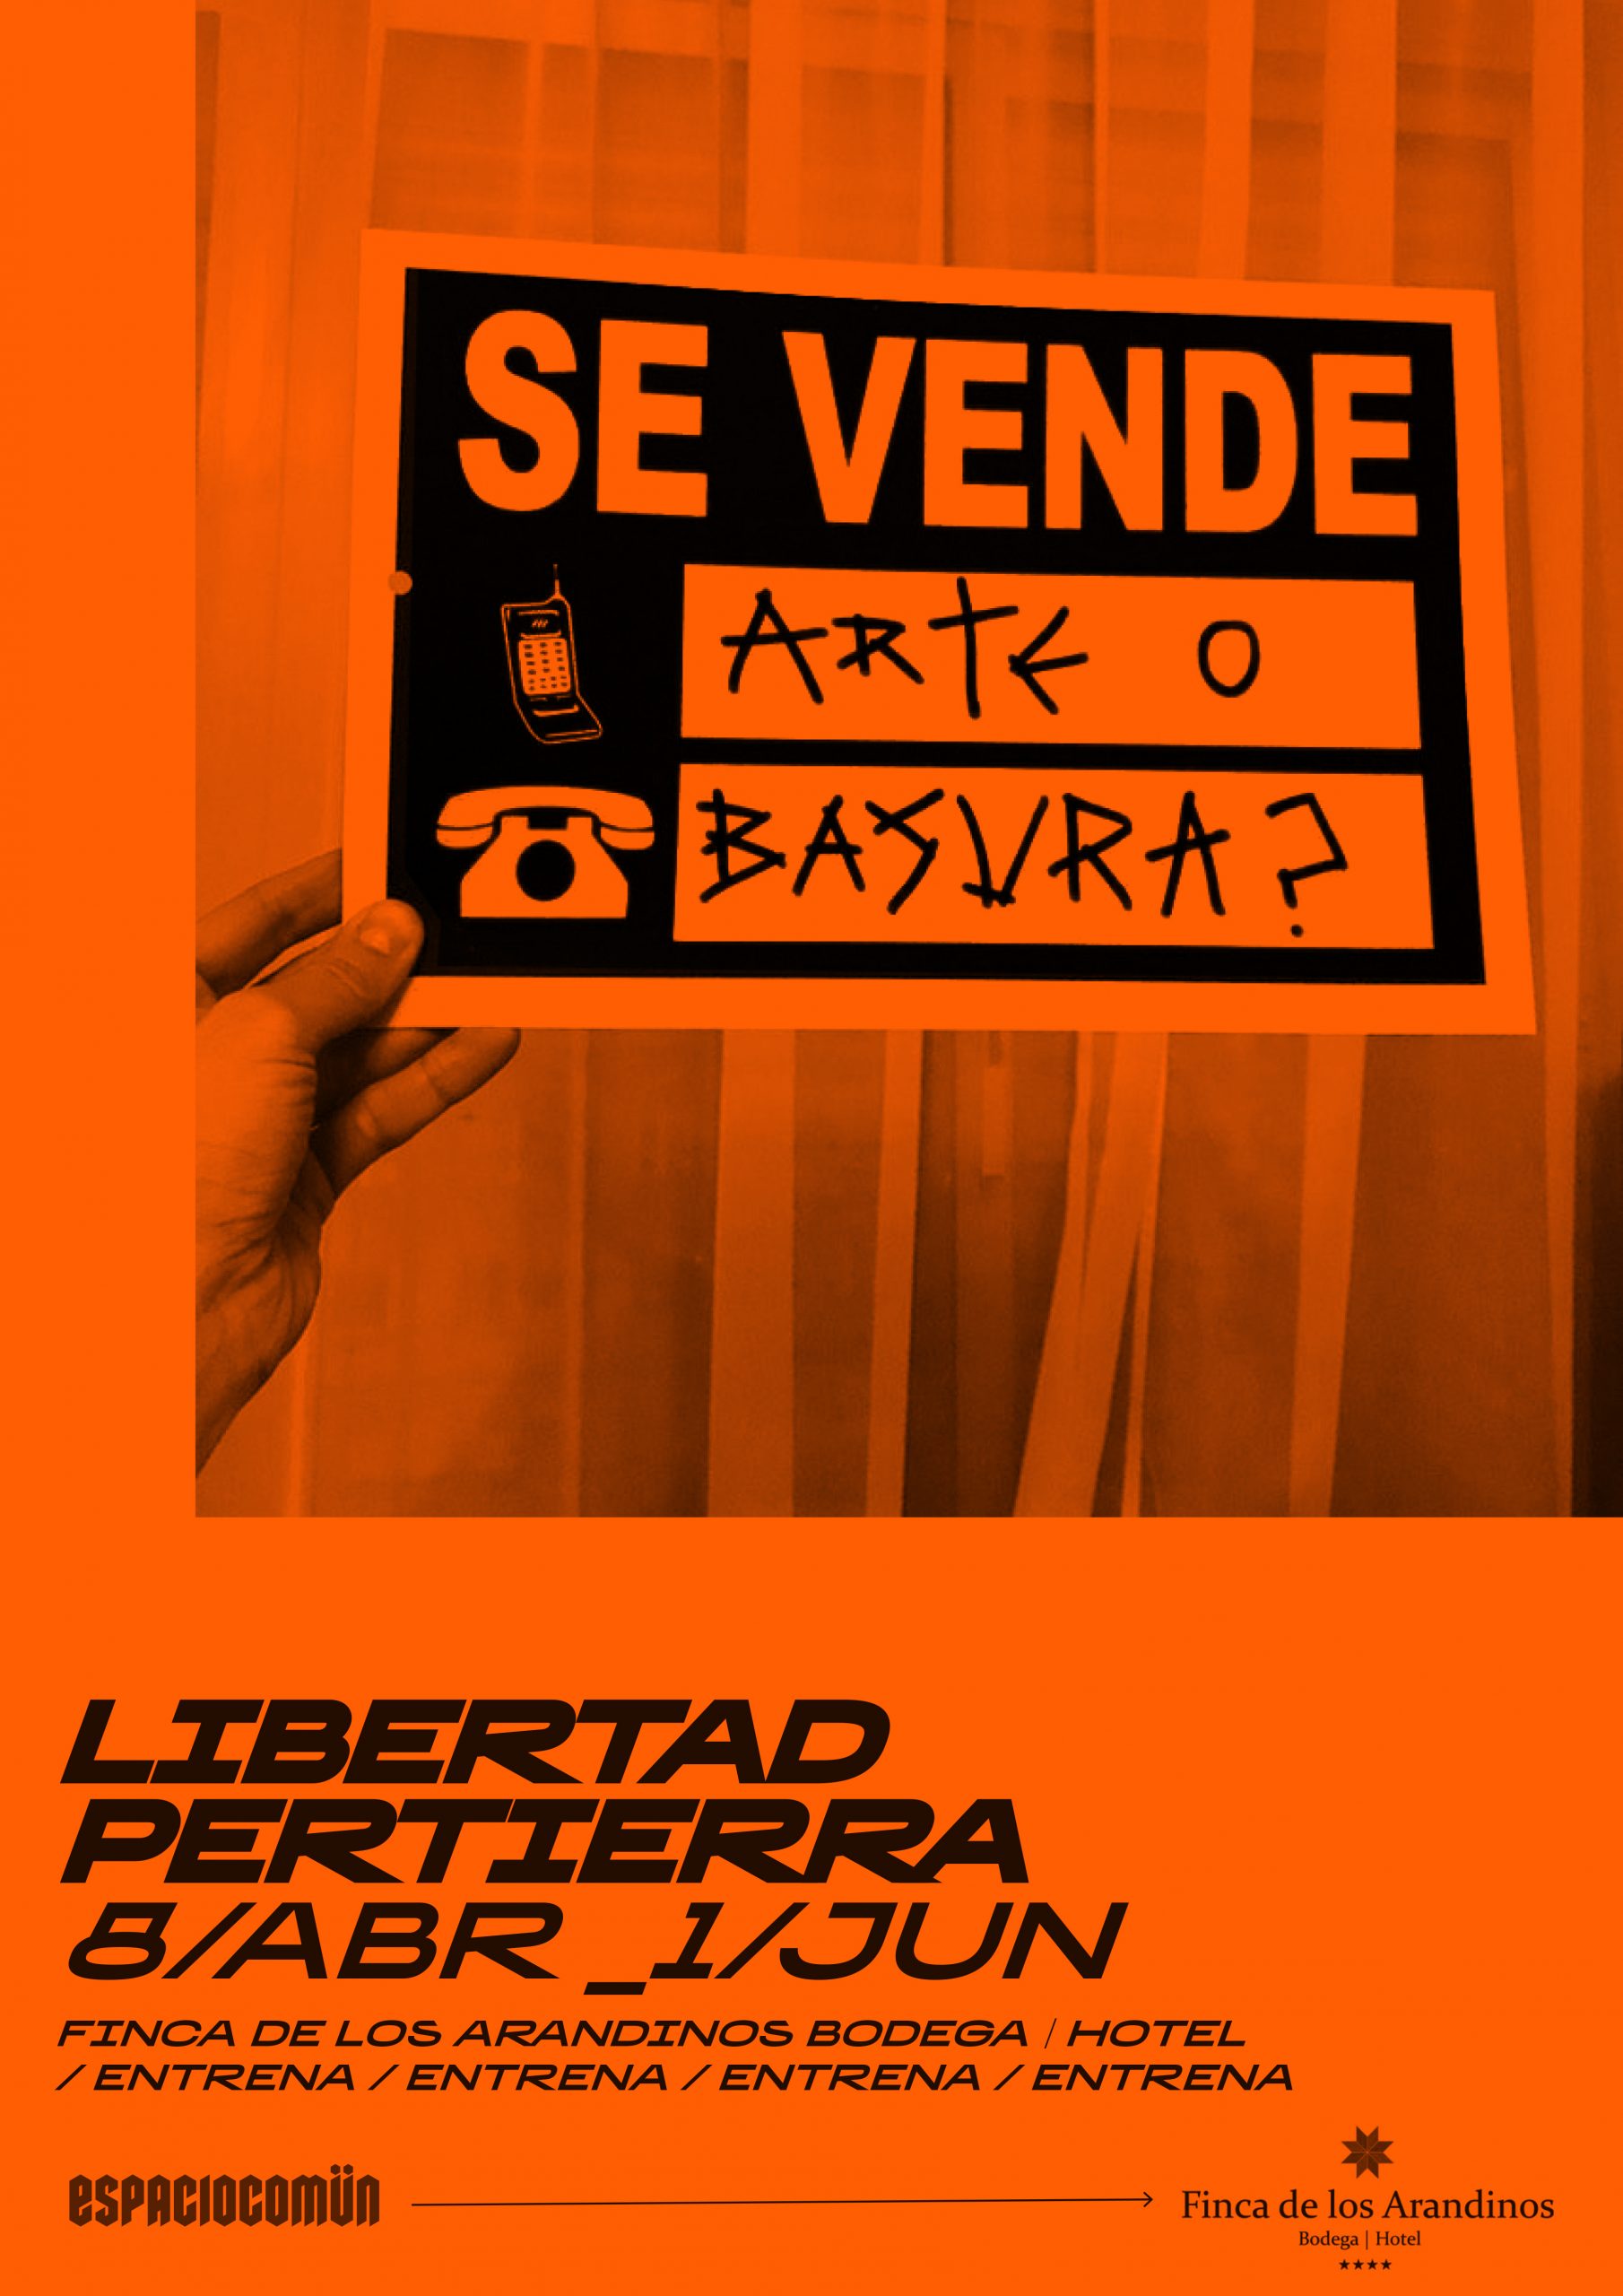 ARTE O BASURA: Libertad Pertierra en bodega hotel Arandinos